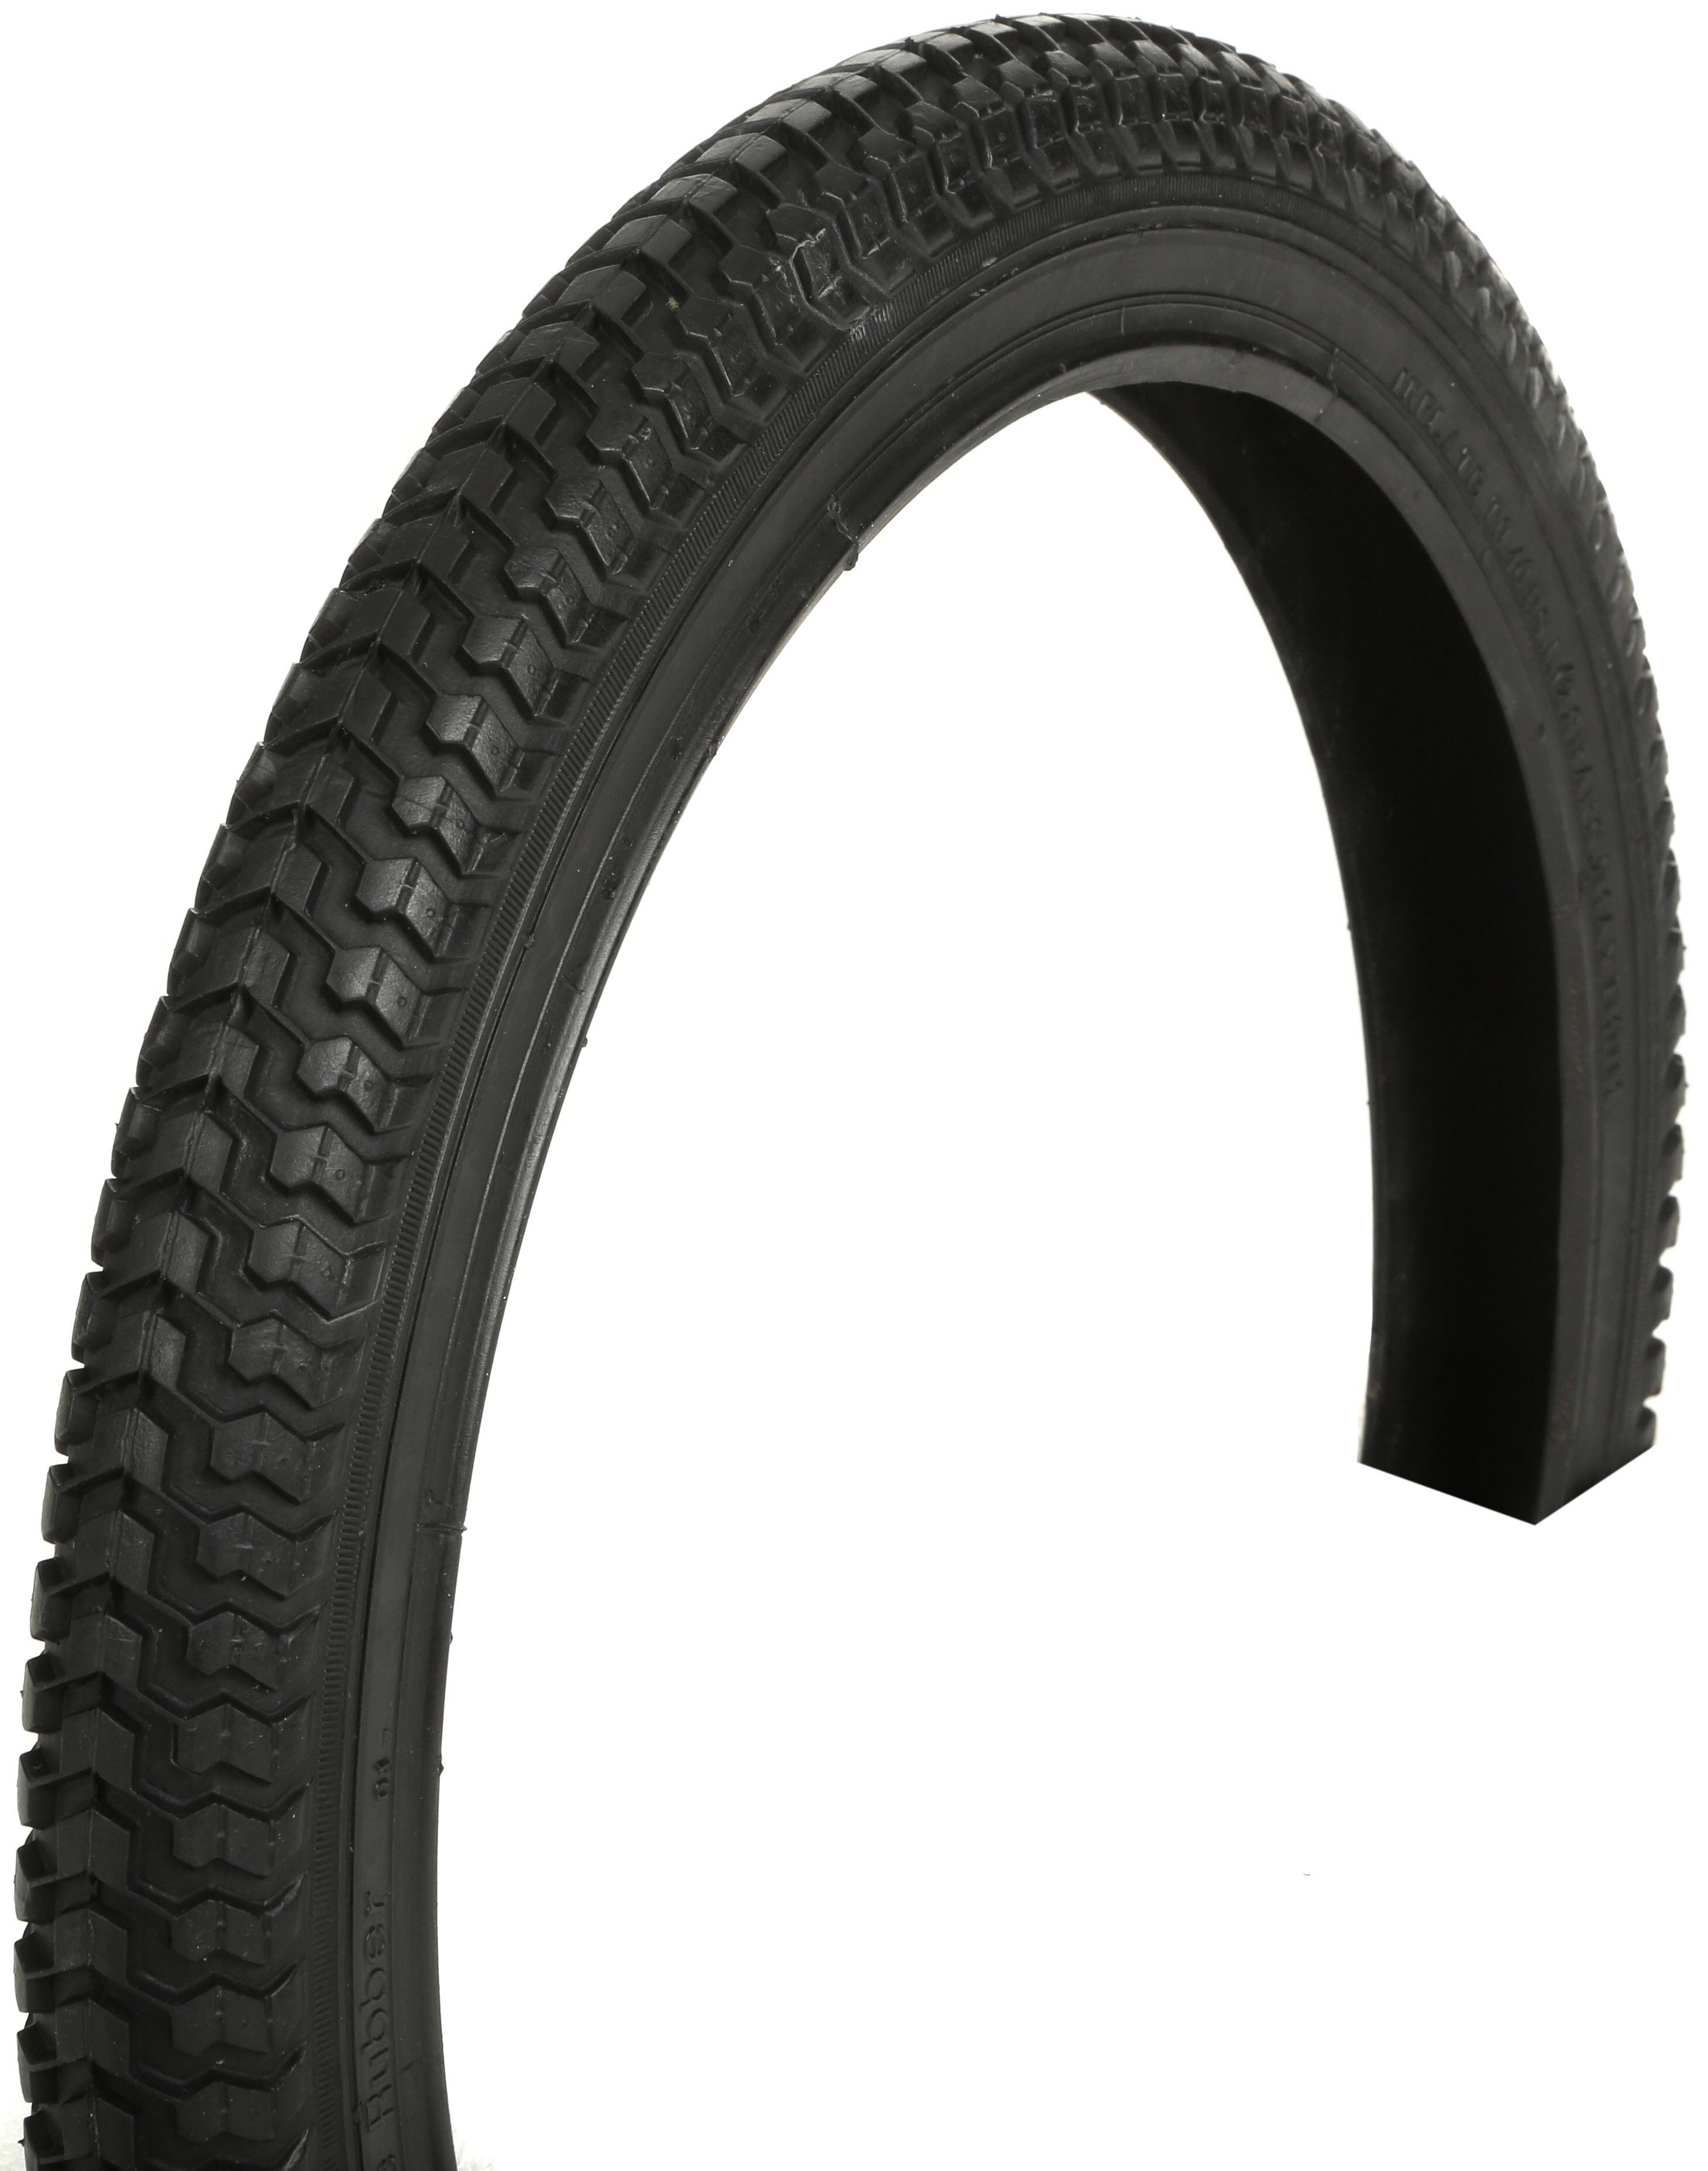 18 in bike tire